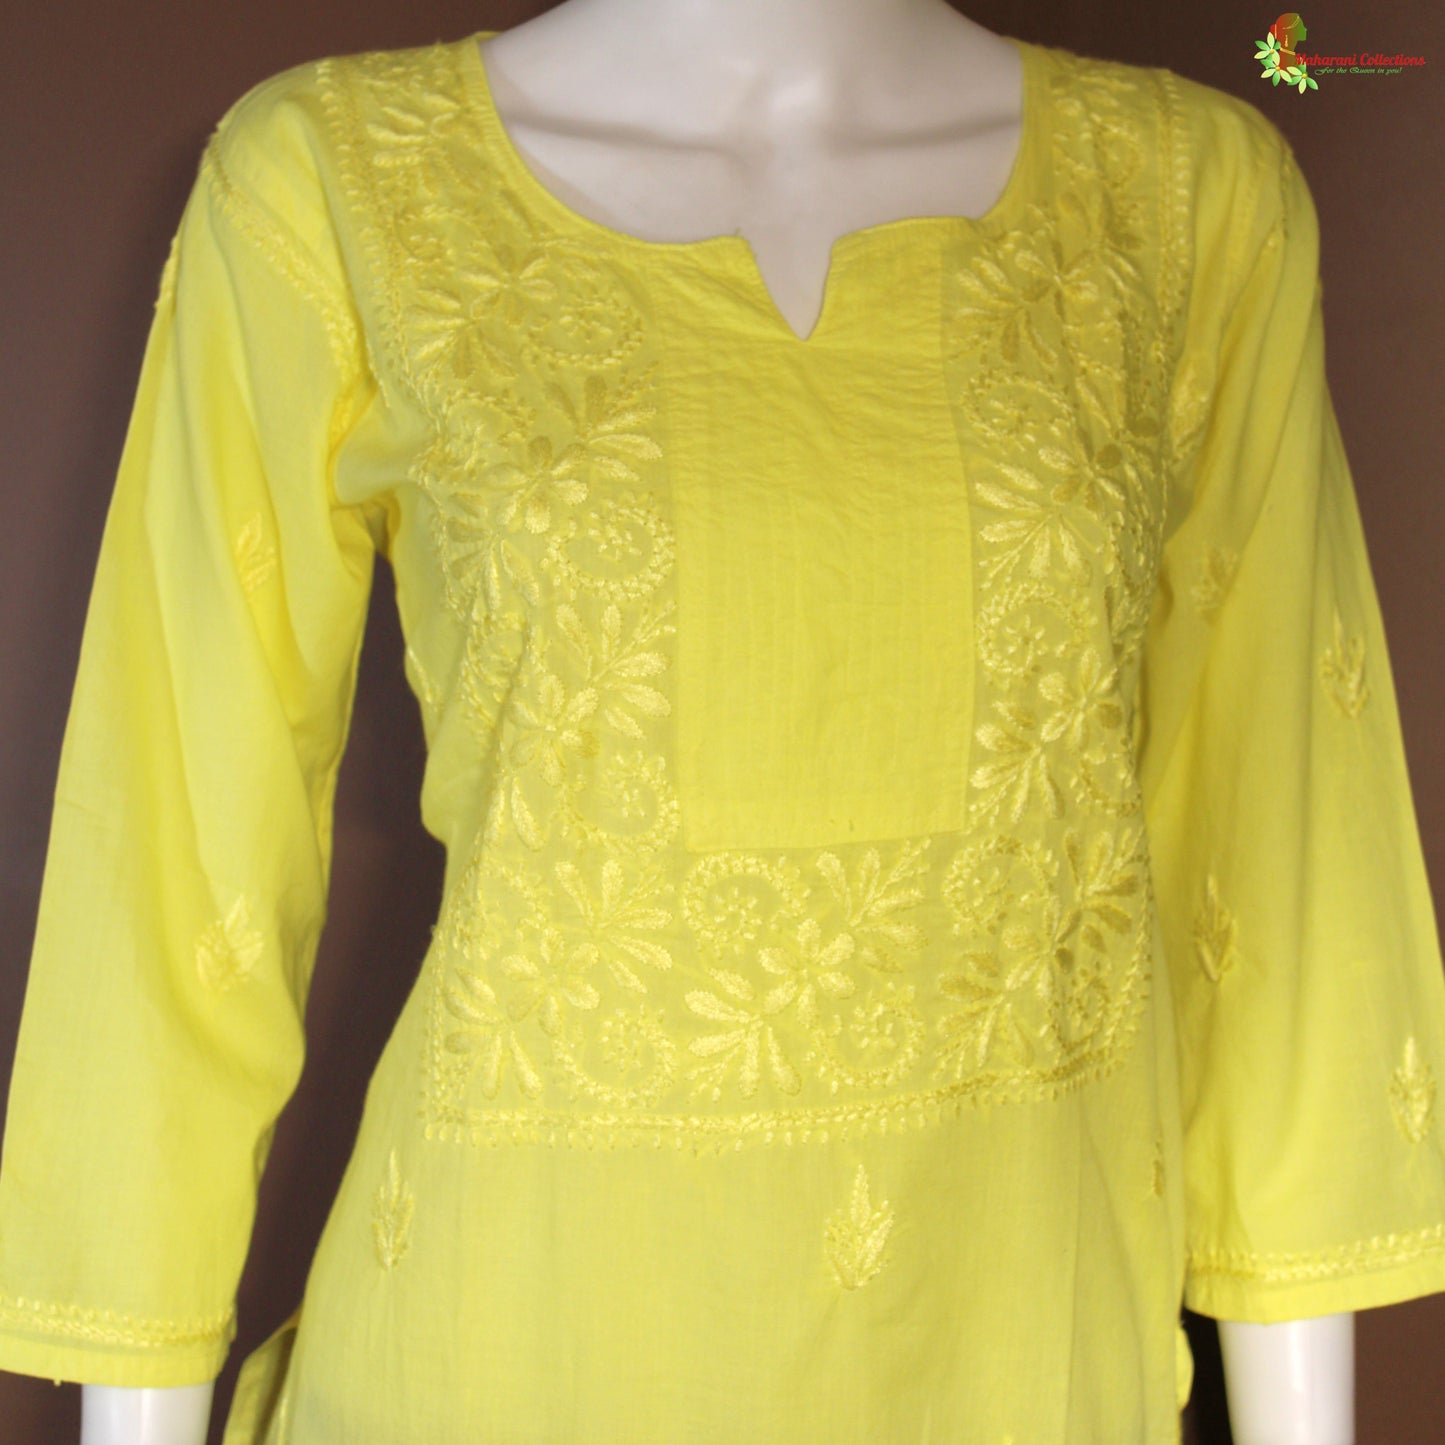 Maharani's Soft Cotton Lucknowi Kurta Top - Yellow (M)